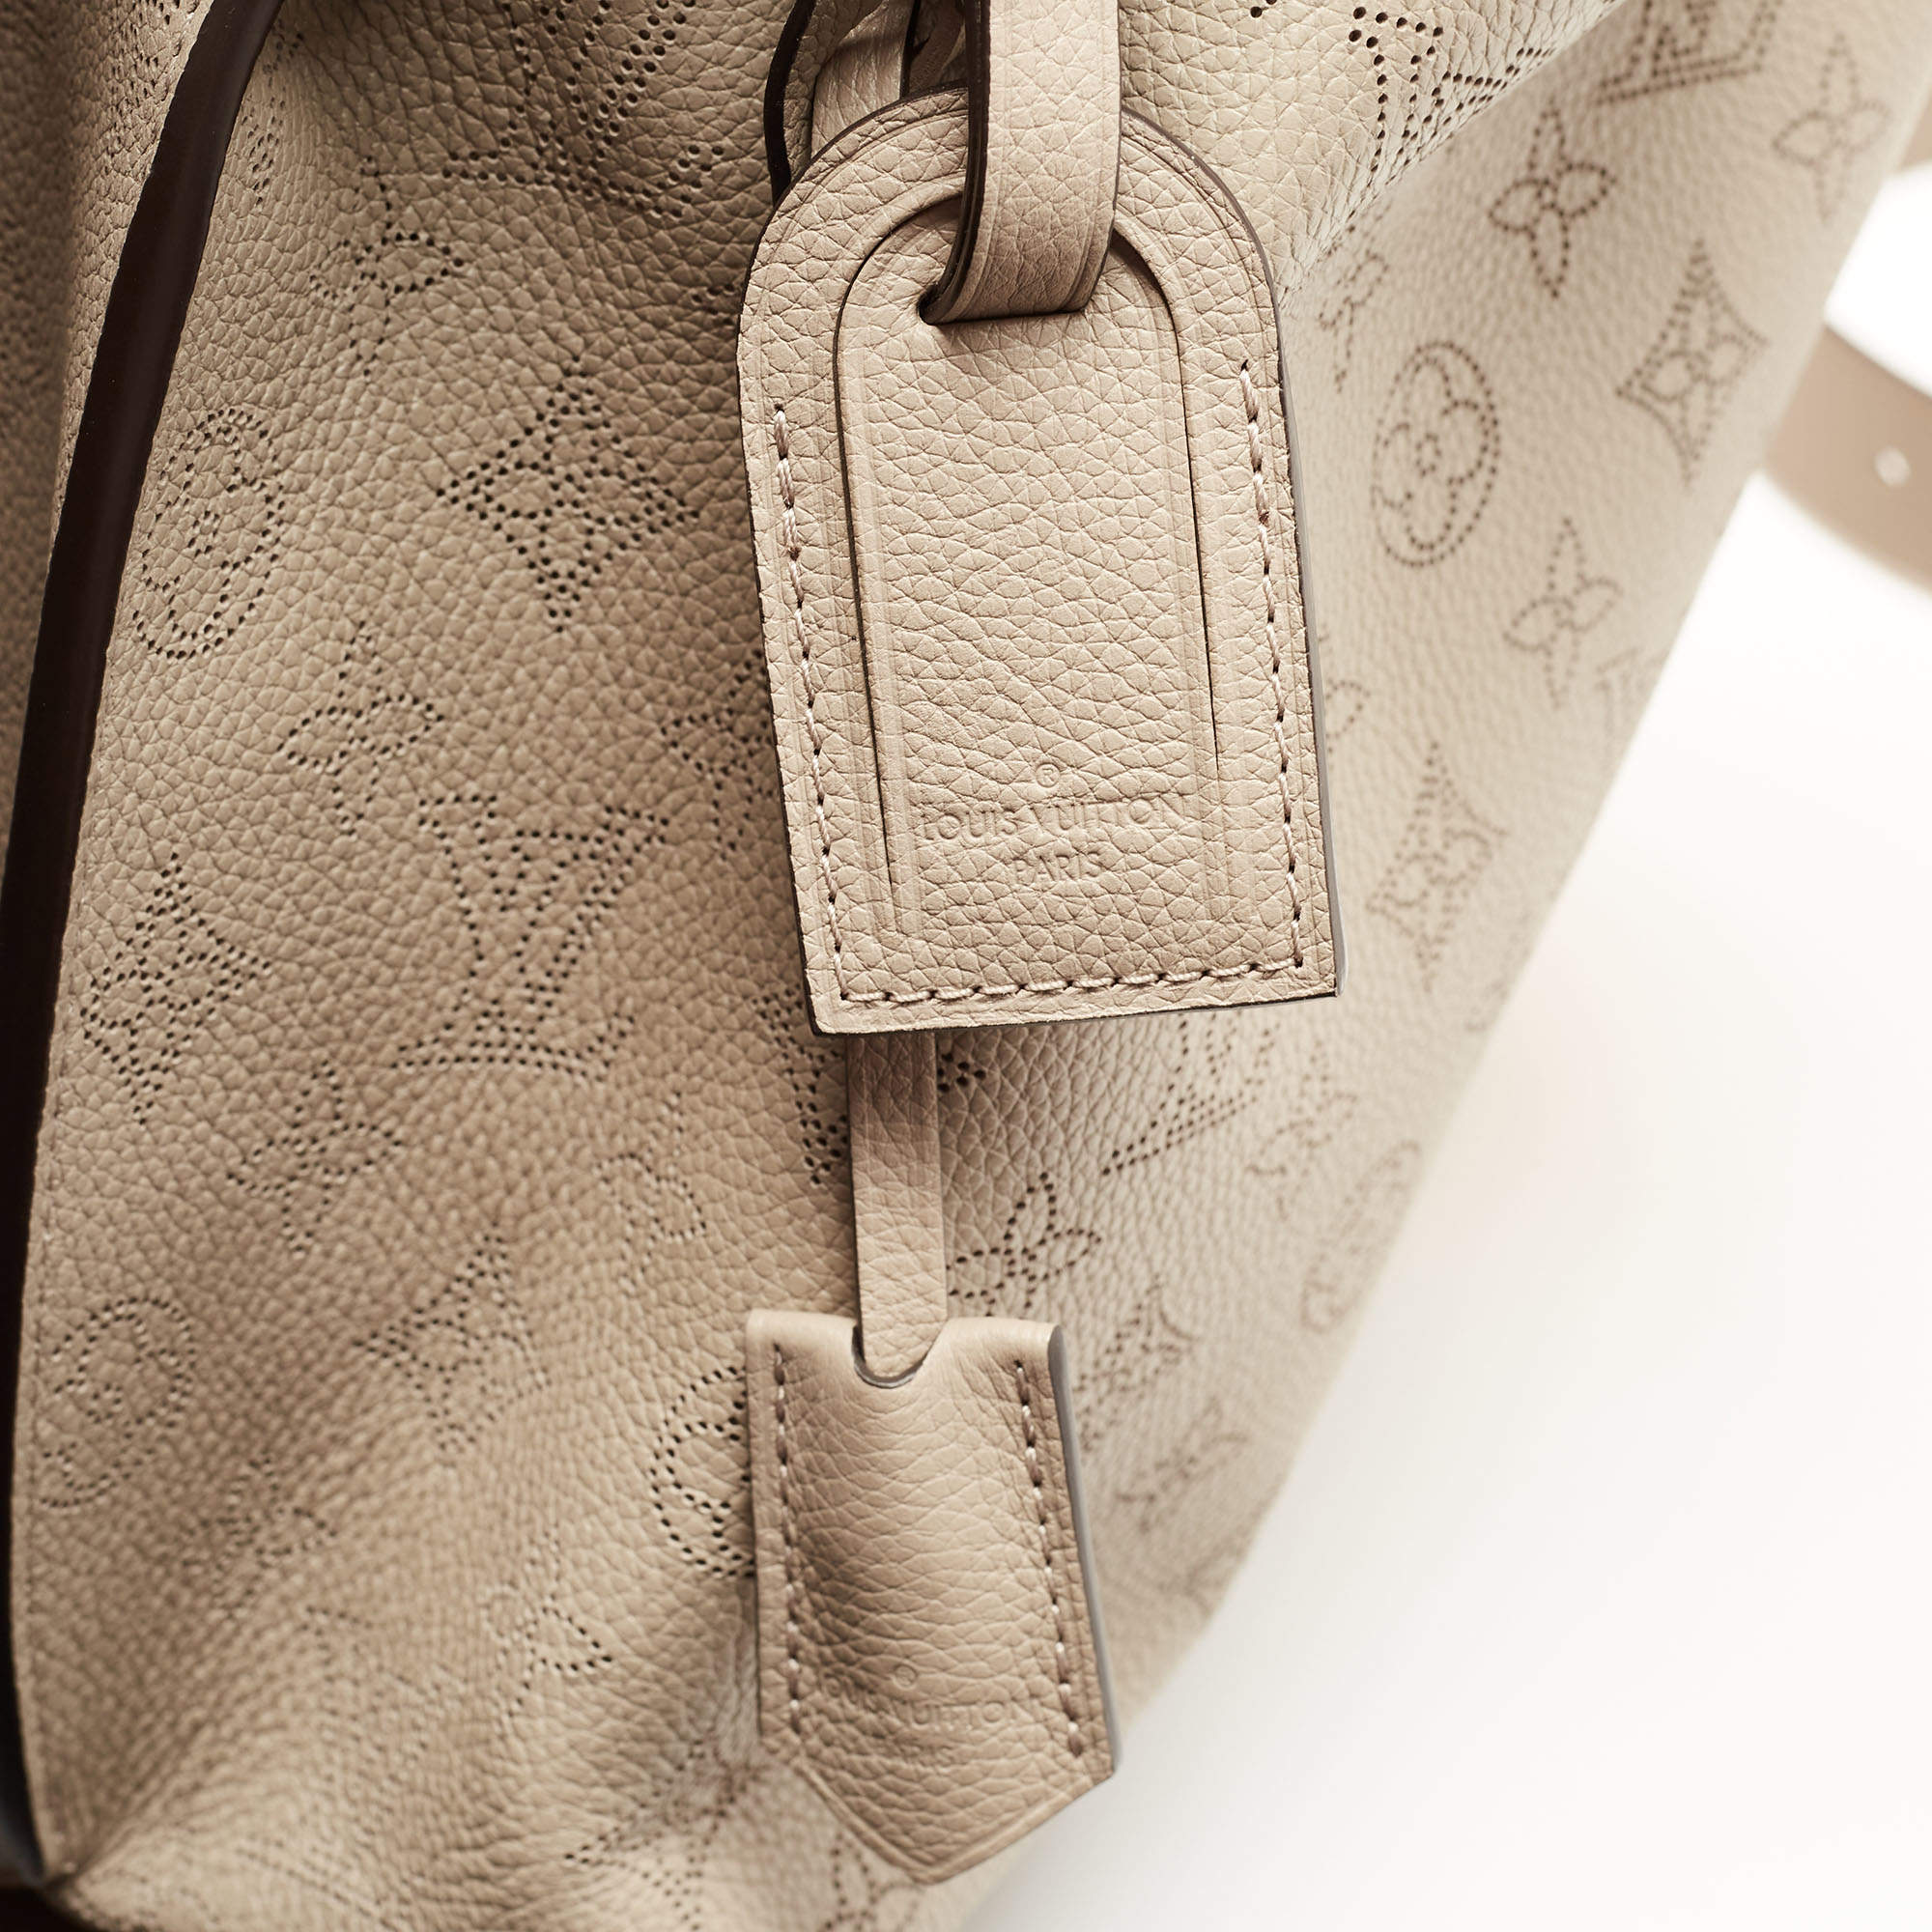 Auth Louis Vuitton Asteria Handbag Mahina Leather